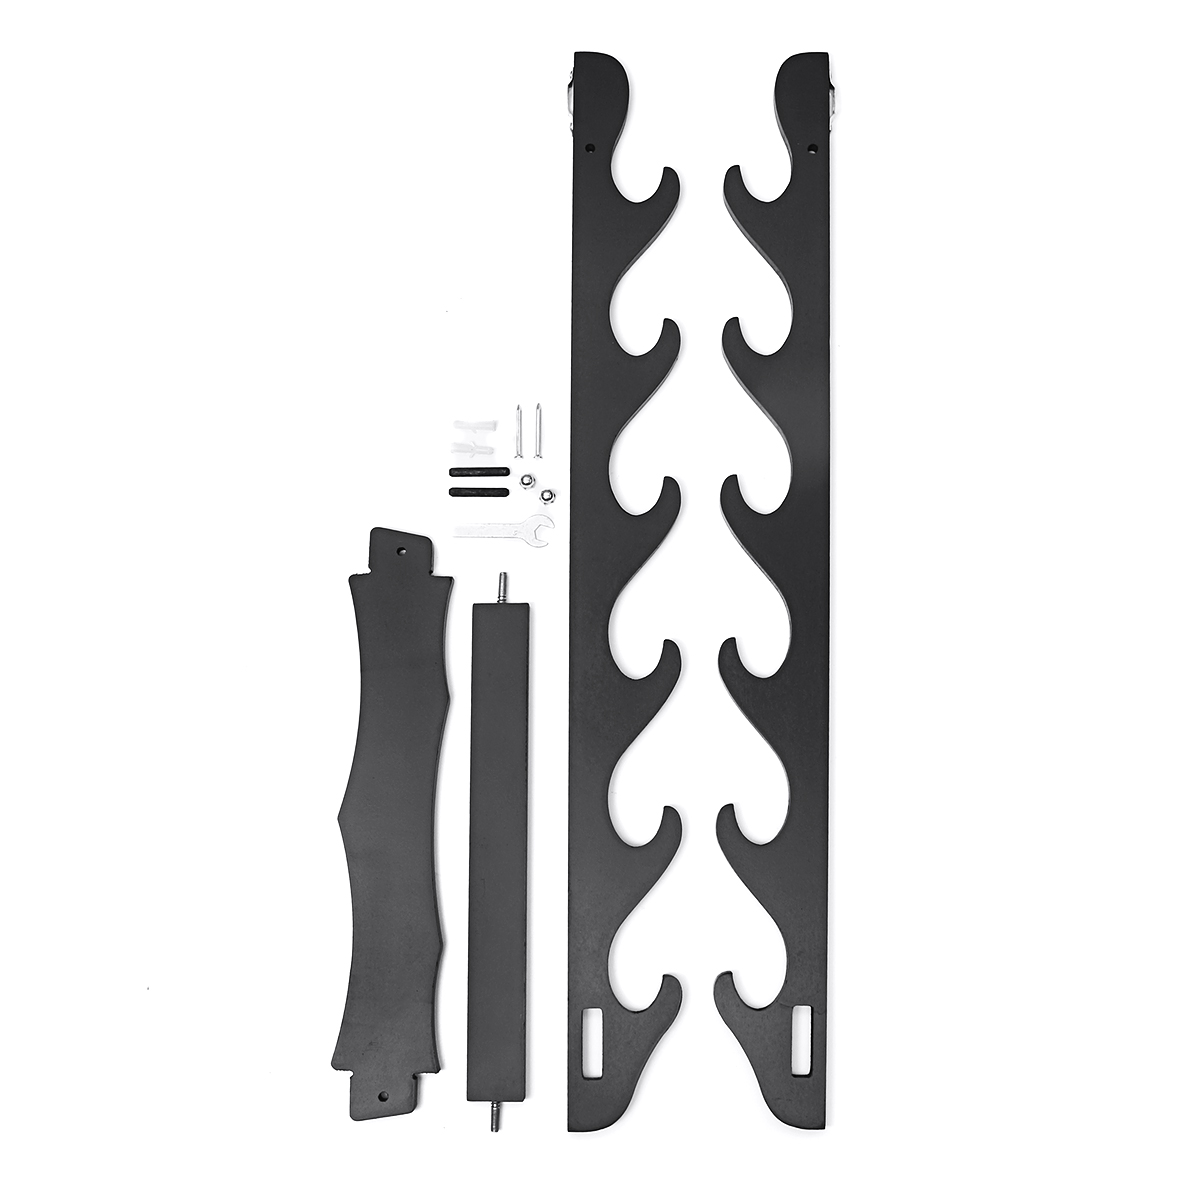 1/2/3/4/5/6 Tier Holder Wall Mount Samurai Stand Display Katana Hanger Rack Support 9